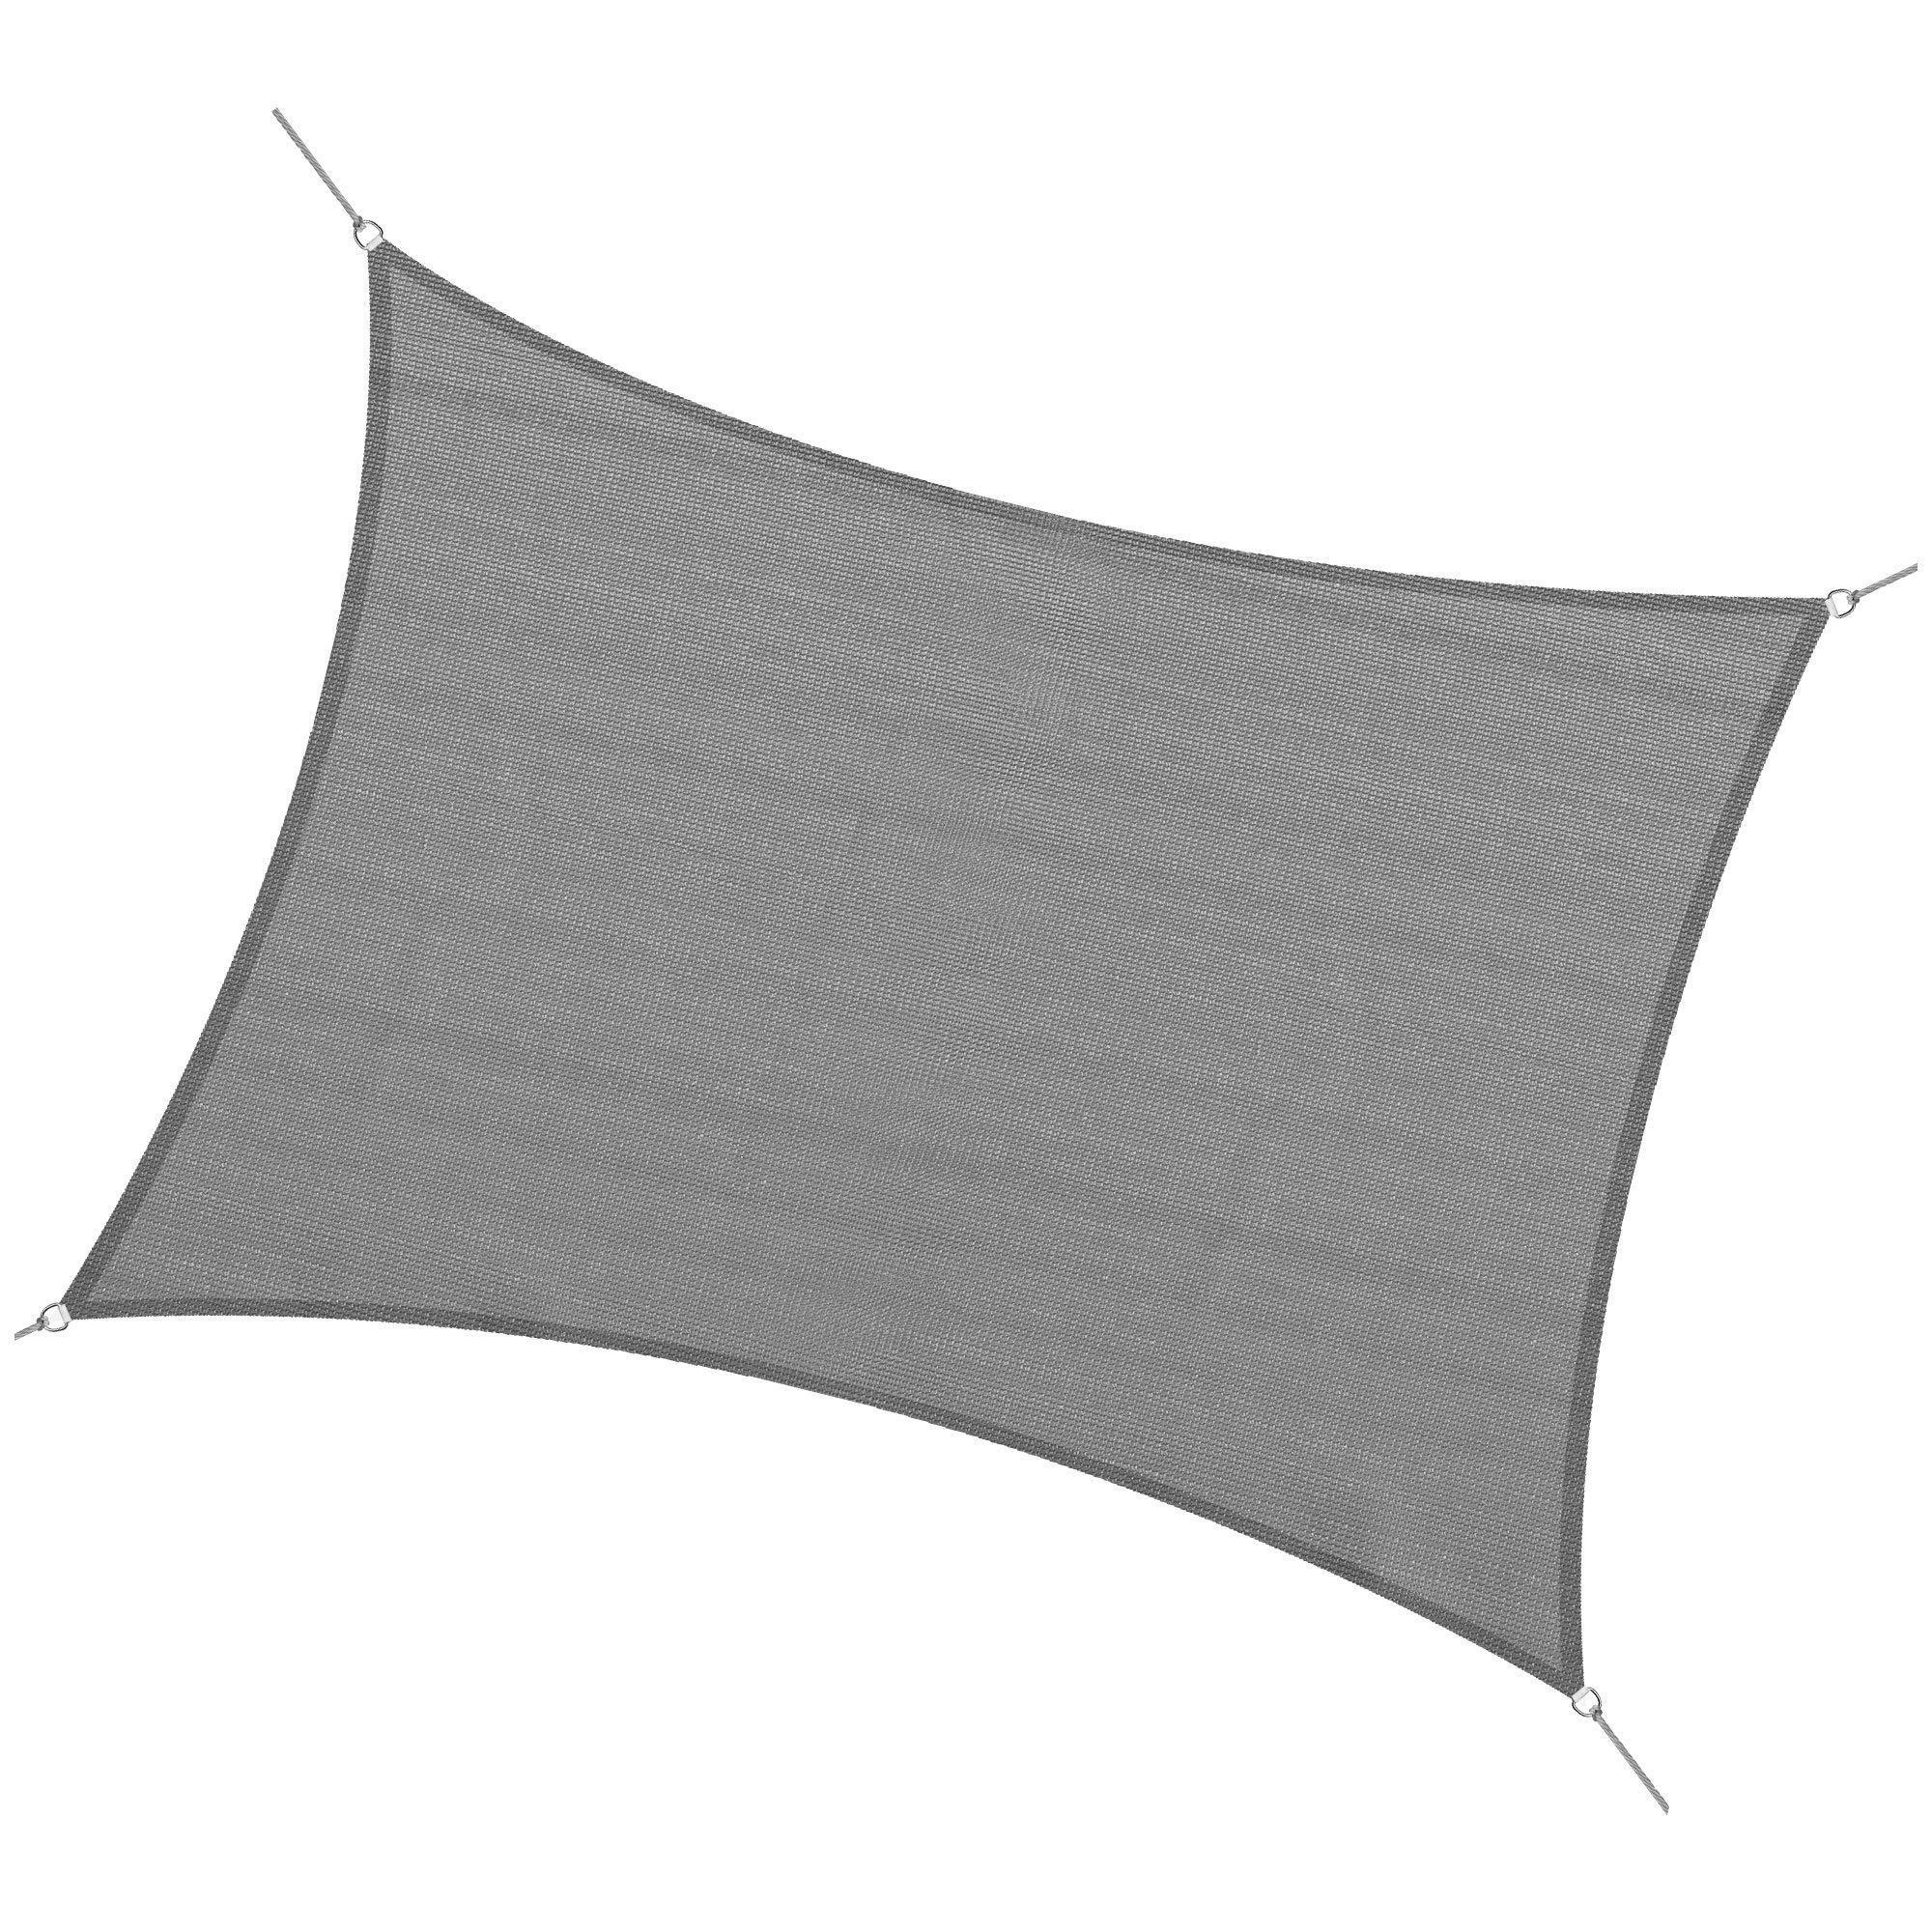 5x4m Sun Shade Sail Rectangle HDPE Canopy UV Protection - image 1